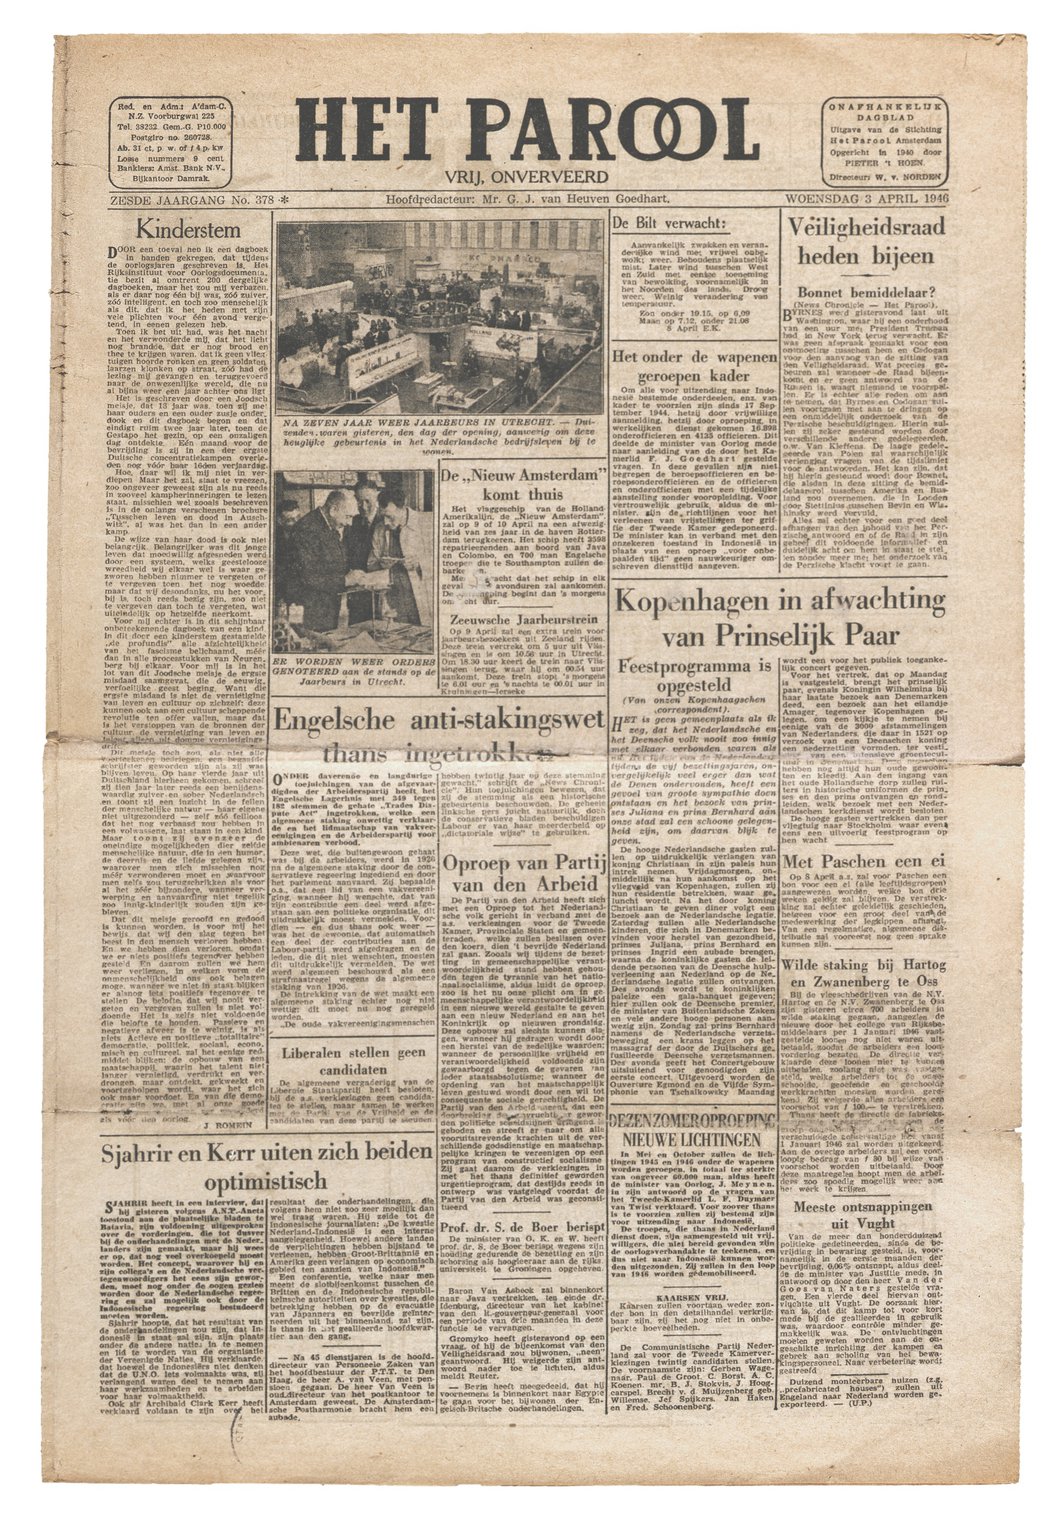 La columna “Voz infantil” de Jan Romein en la portada del diario Het Parool, 3 de abril de 1946.